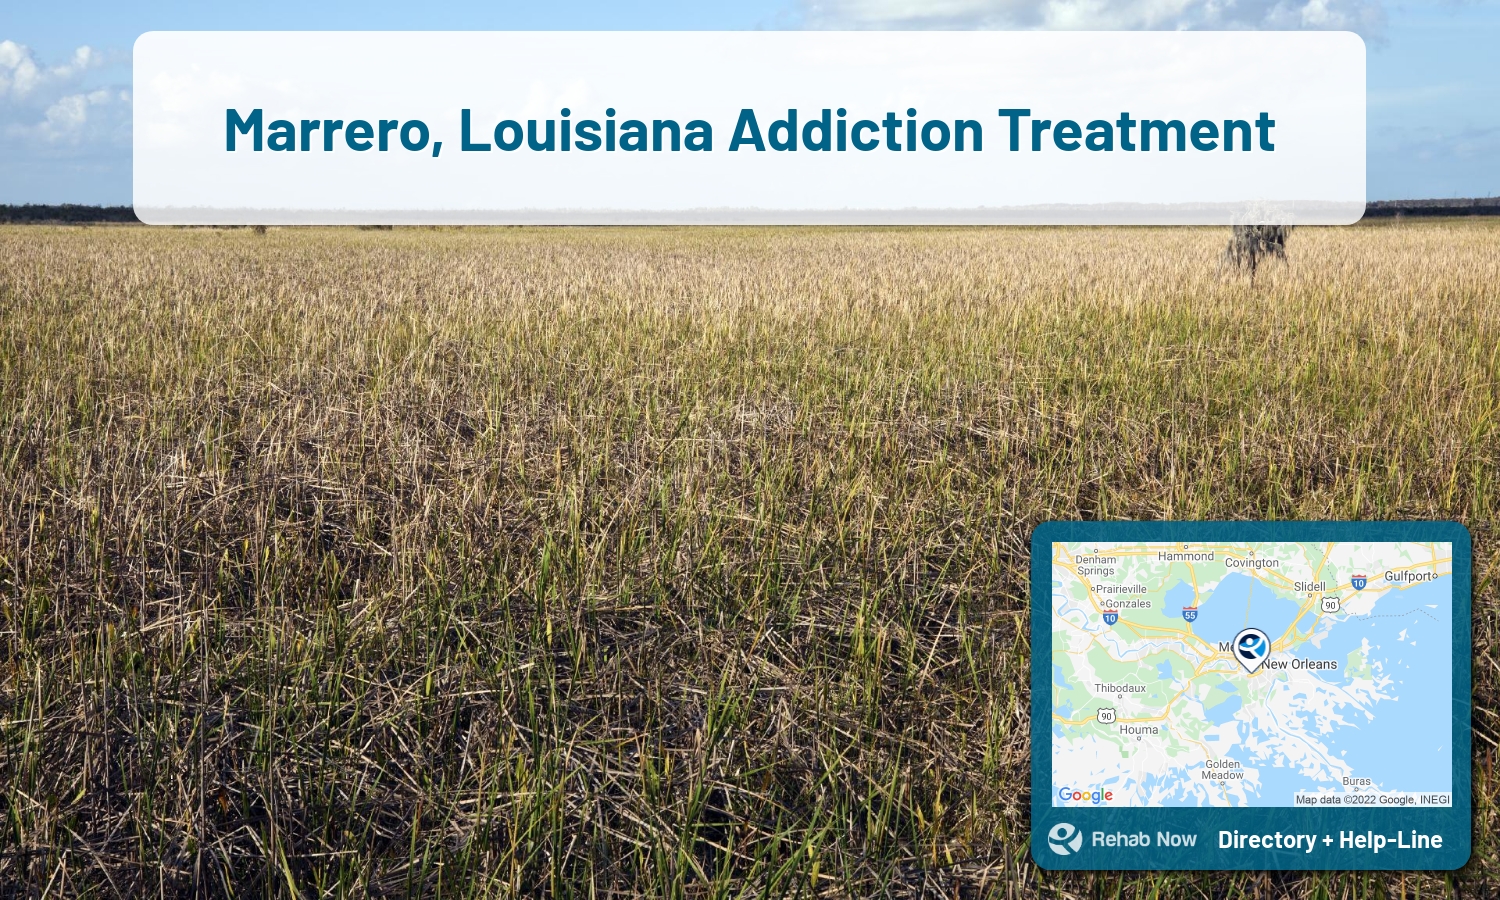 Marrero, LA Treatment Centers. Find drug rehab in Marrero, Louisiana, or detox and treatment programs. Get the right help now!